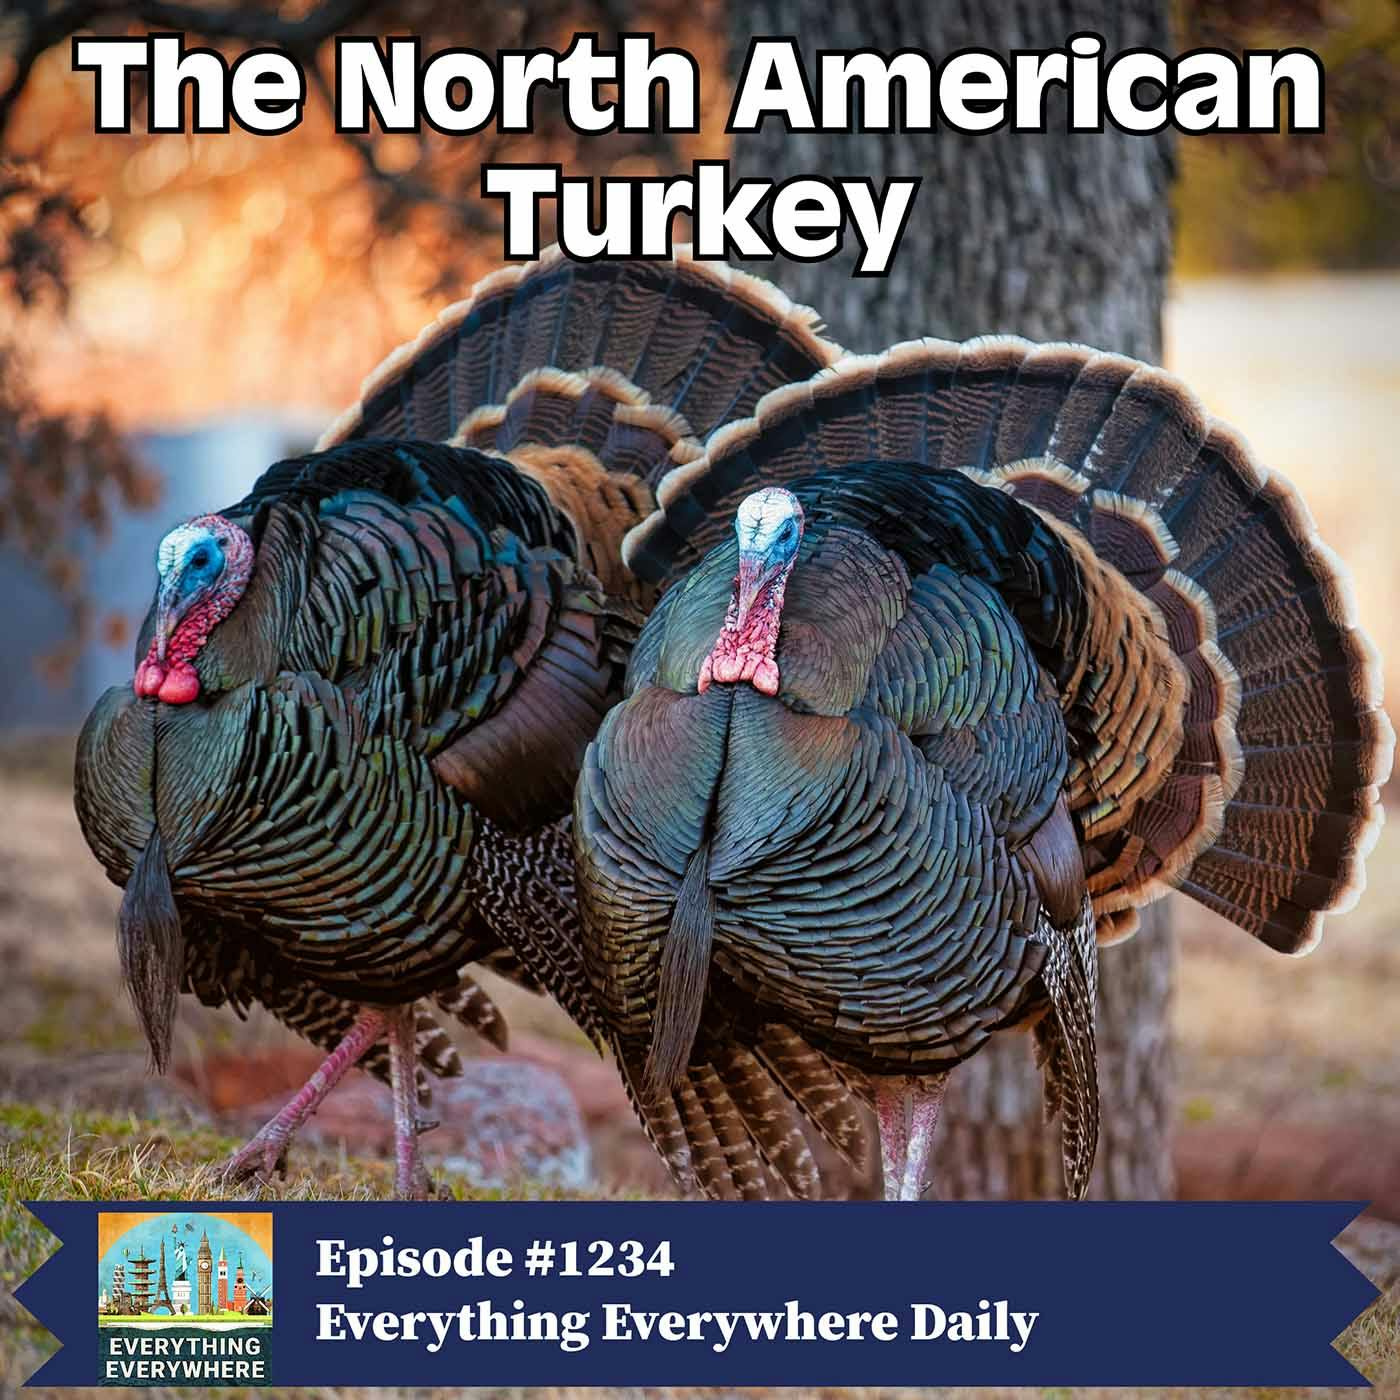 The North American Turkey